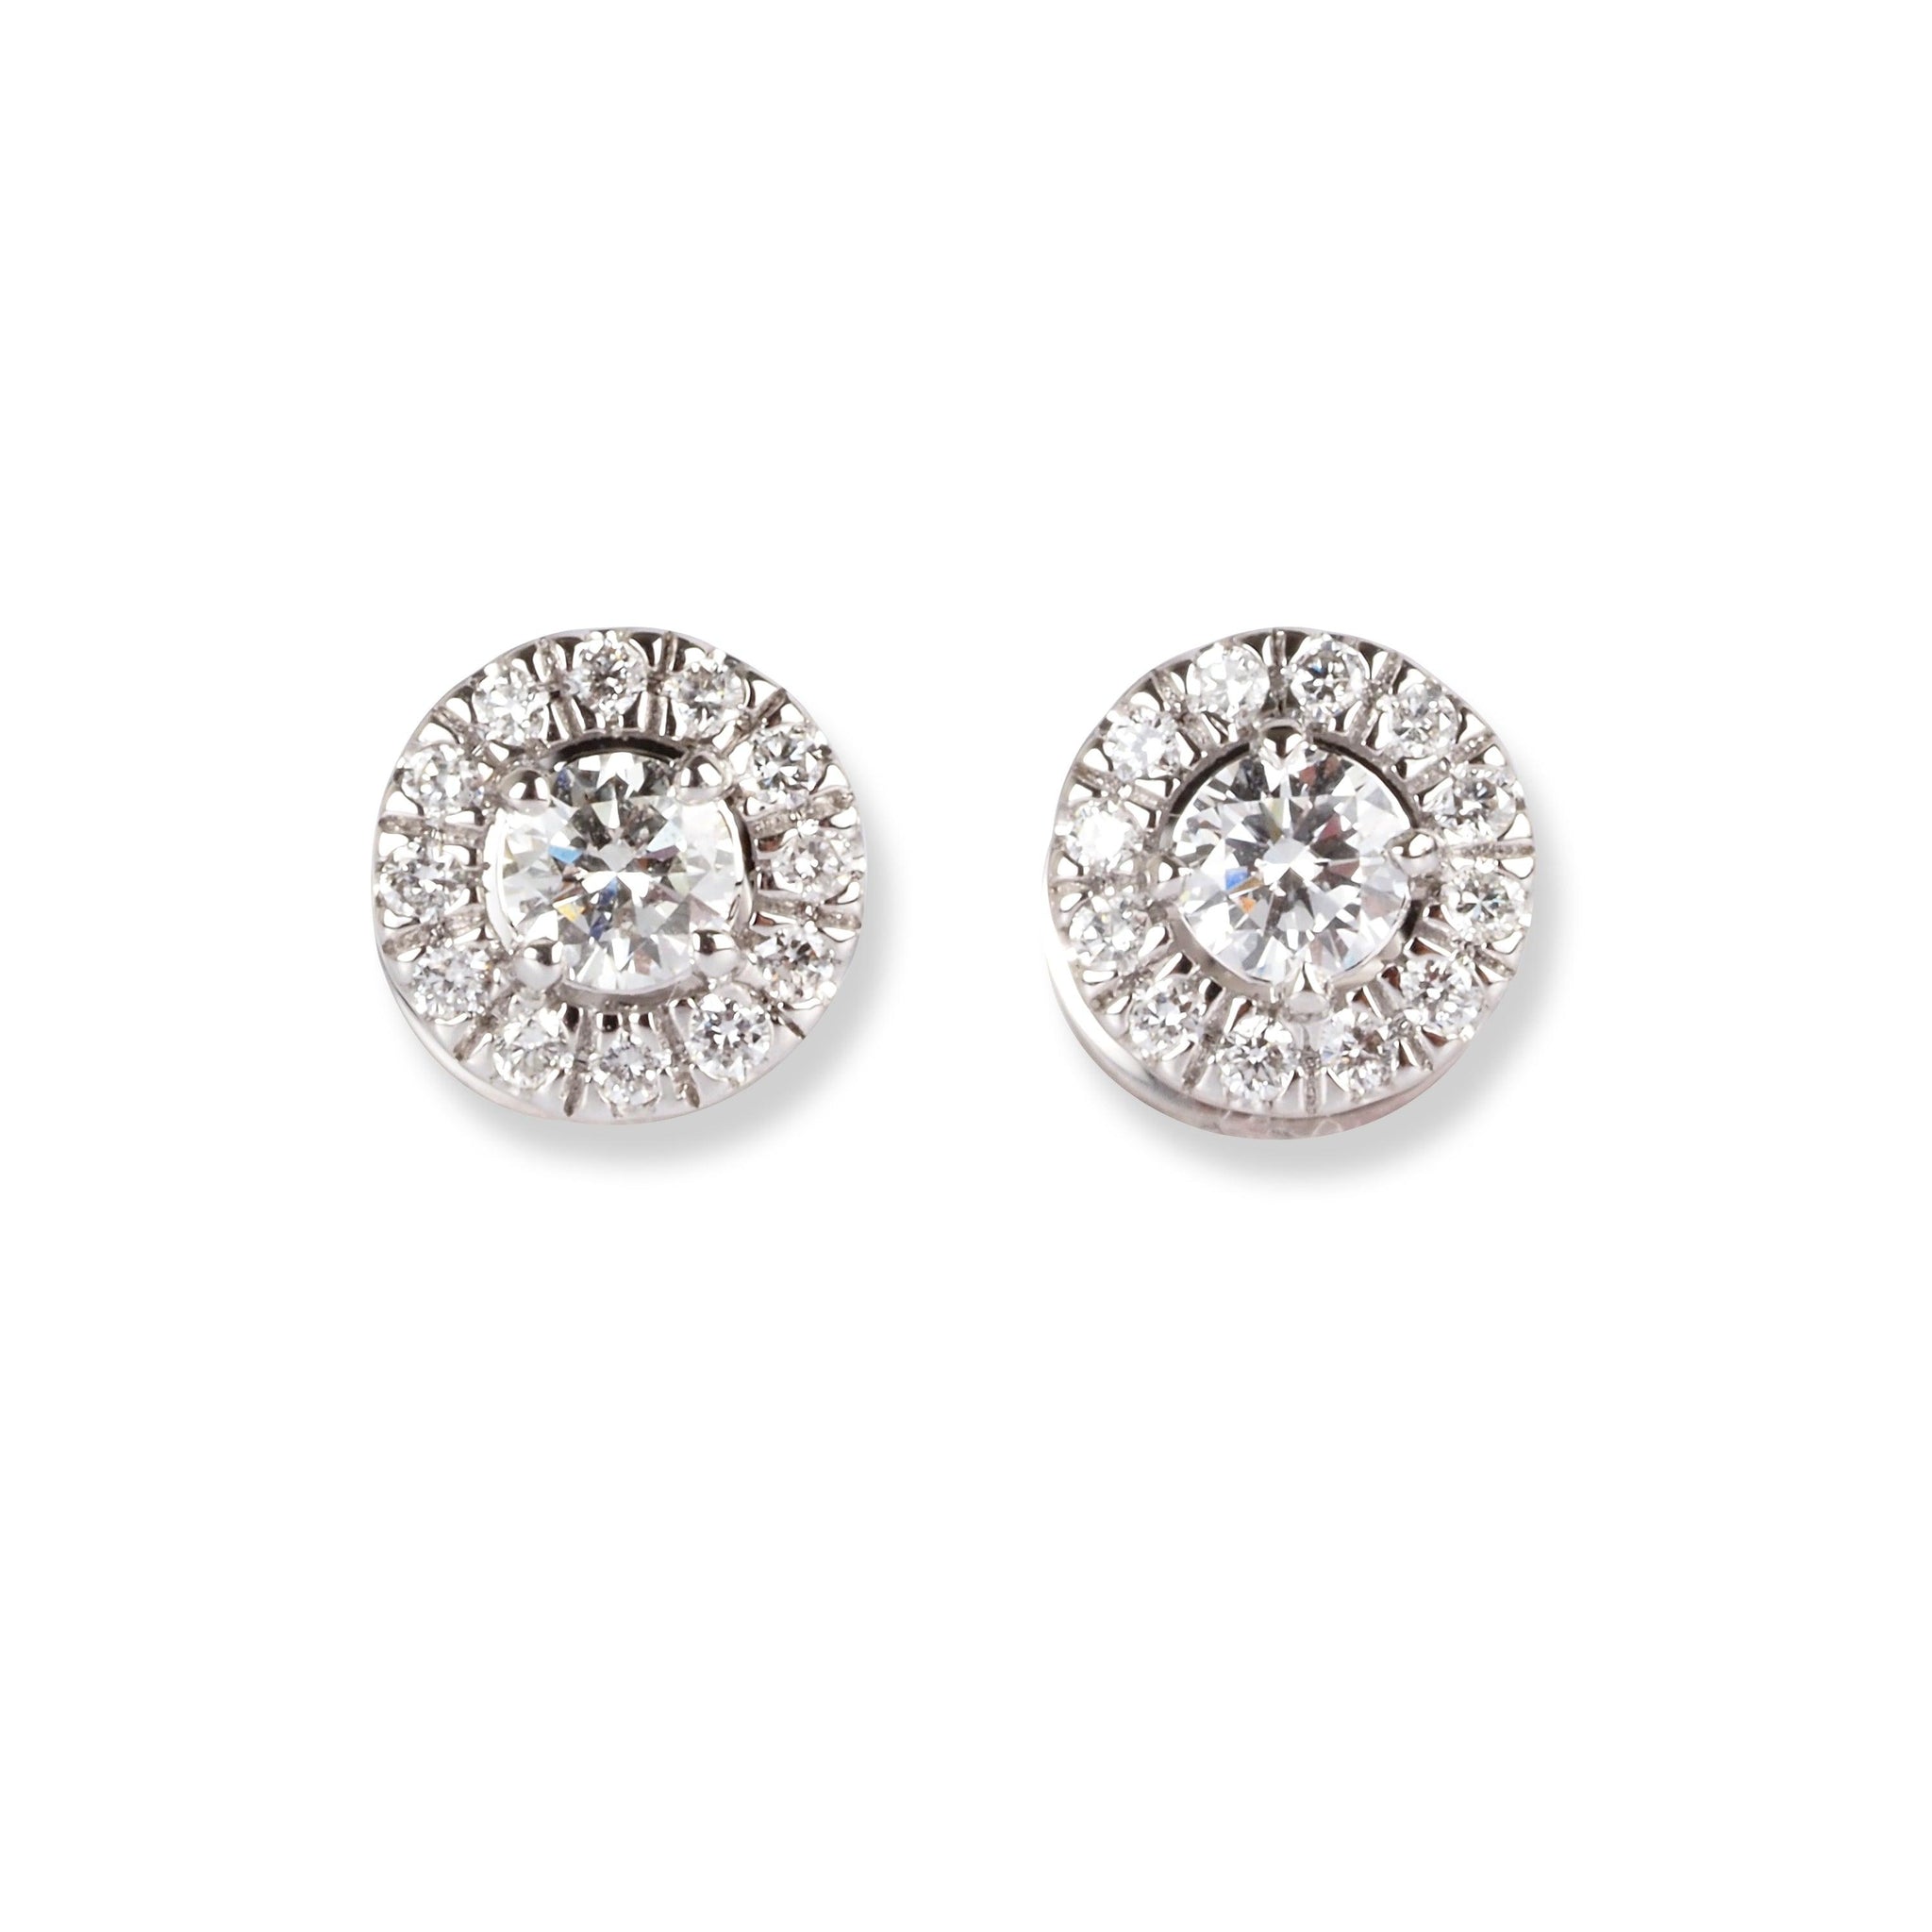 18ct White Gold Diamond Earrings E-7944